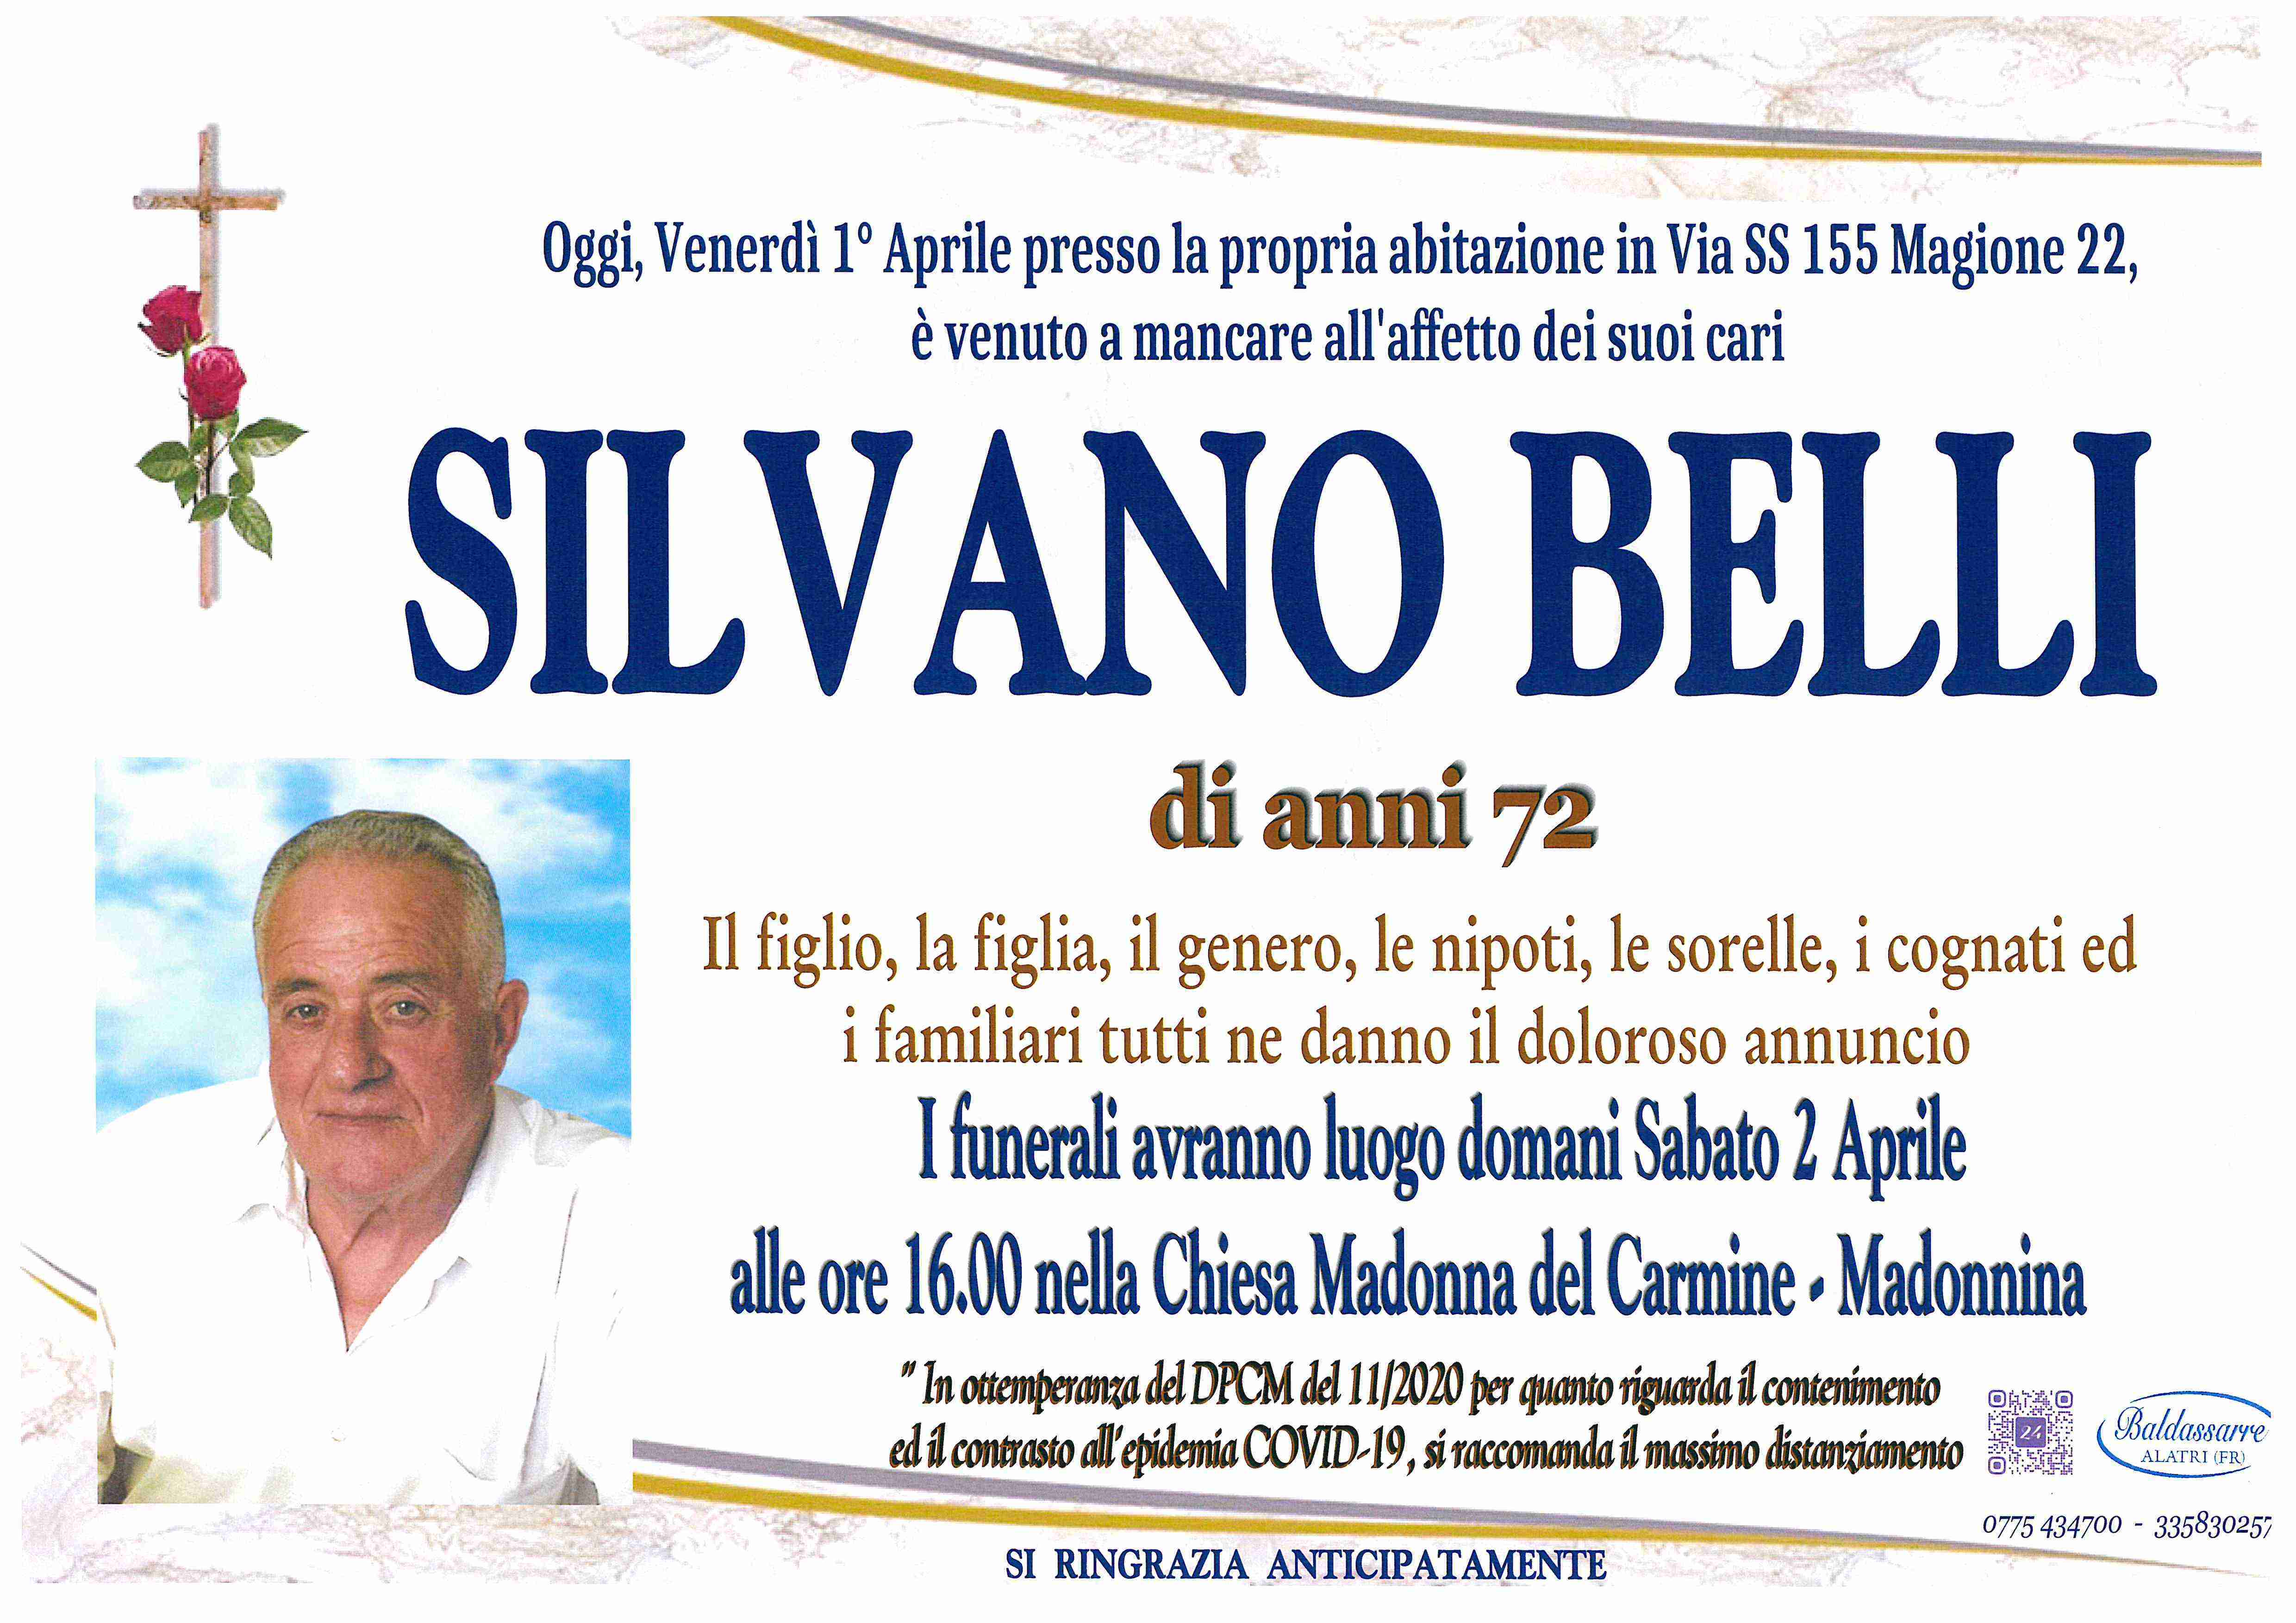 Silvano Belli